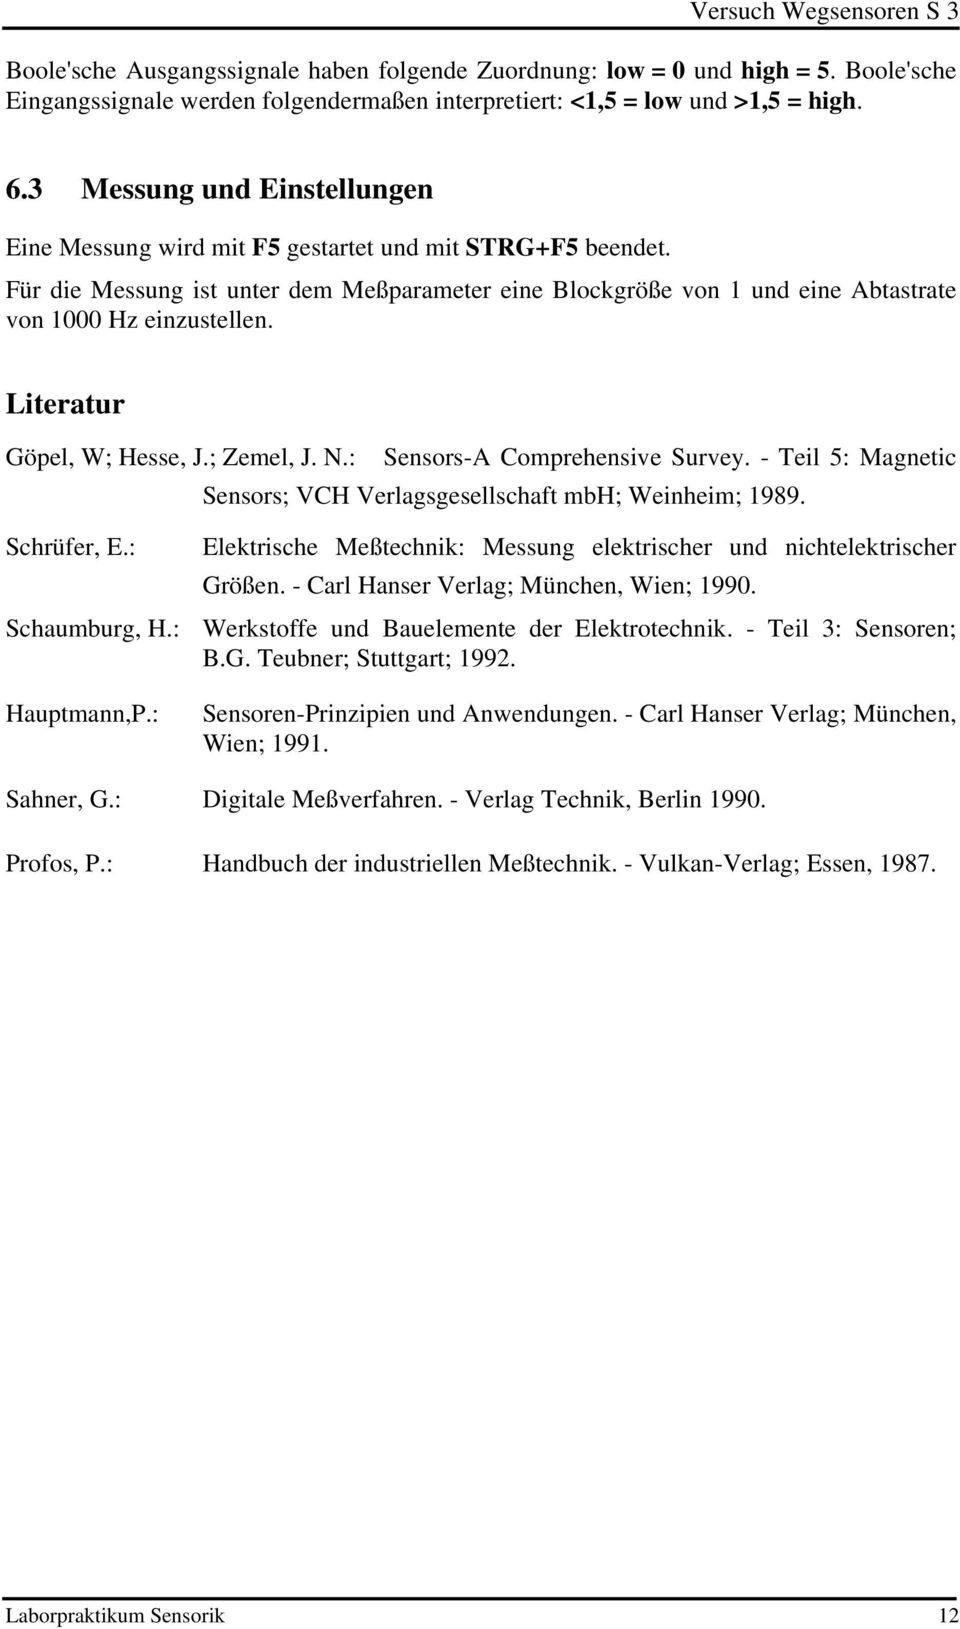 Literatur Göpel, W; Hesse, J.; Zemel, J. N.: Sensors-A Comprehensive Survey. - Teil 5: Magnetic Sensors; VCH Verlagsgesellschaft mbh; Weinheim; 1989. Schrüfer, E.